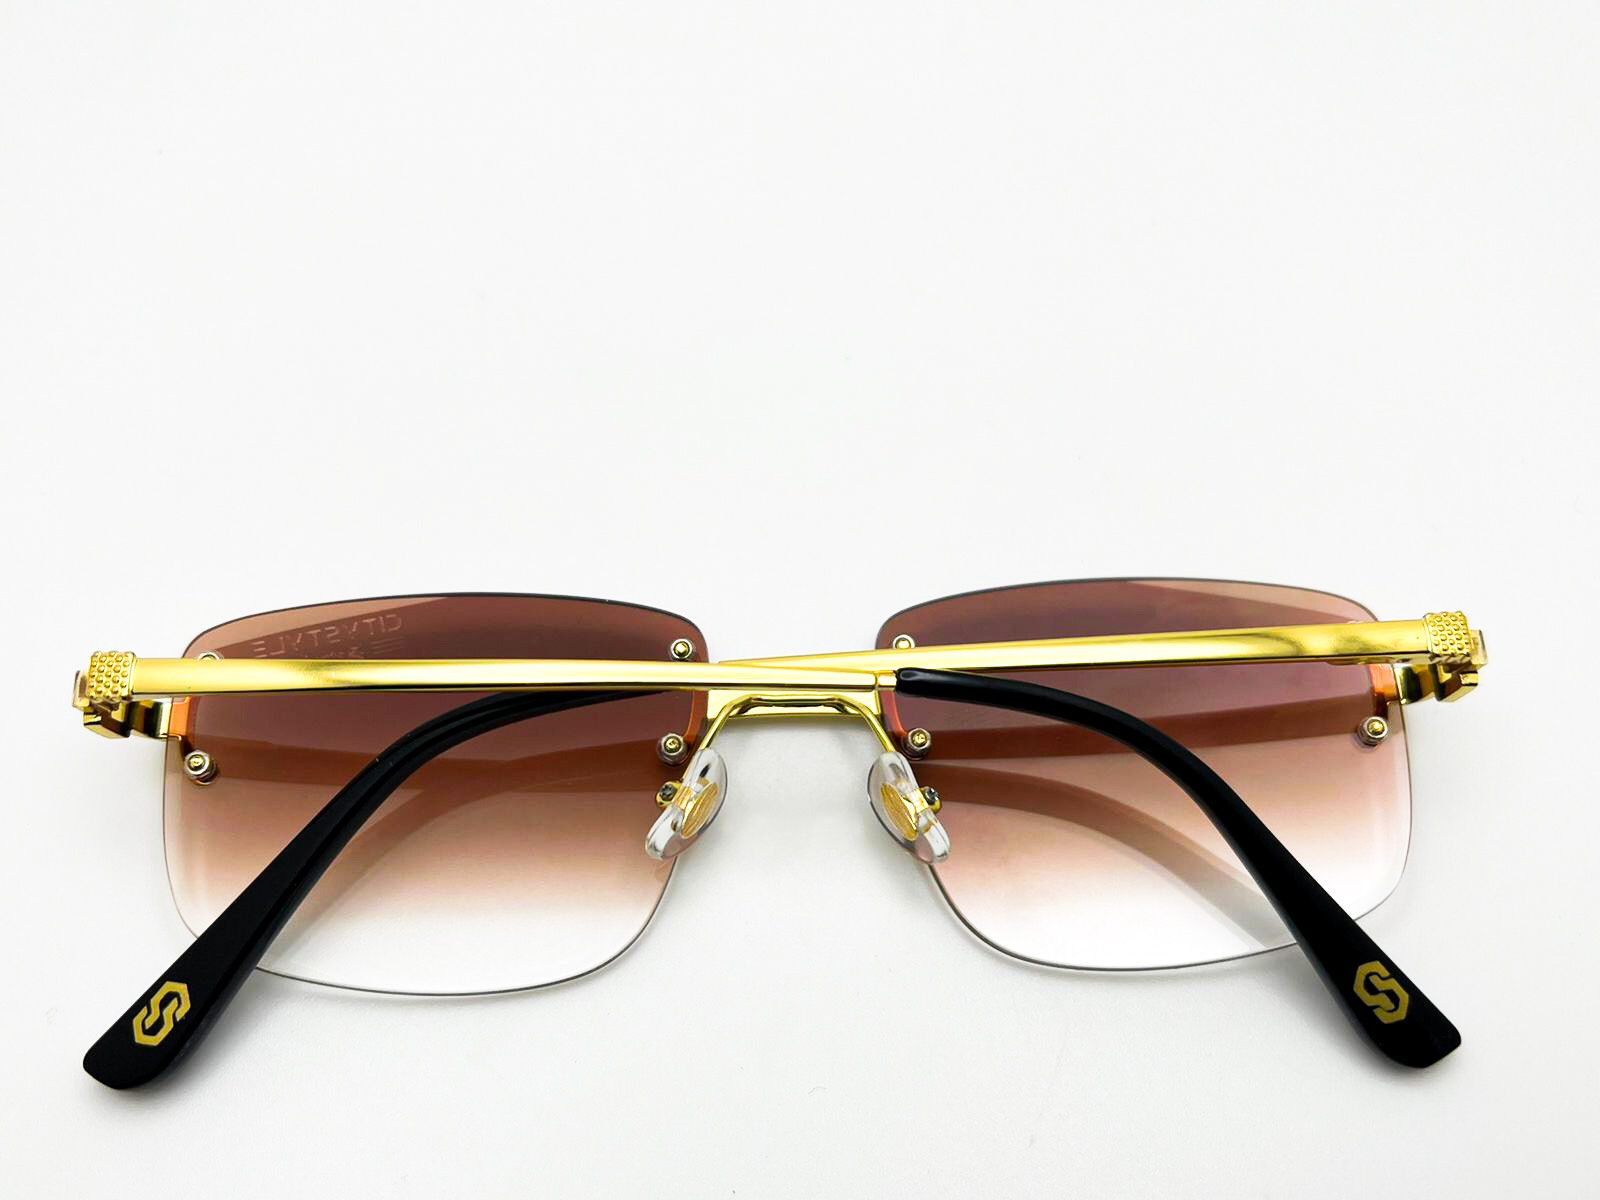 CityStyle™️ Phantom Wire Sunglasses Brown